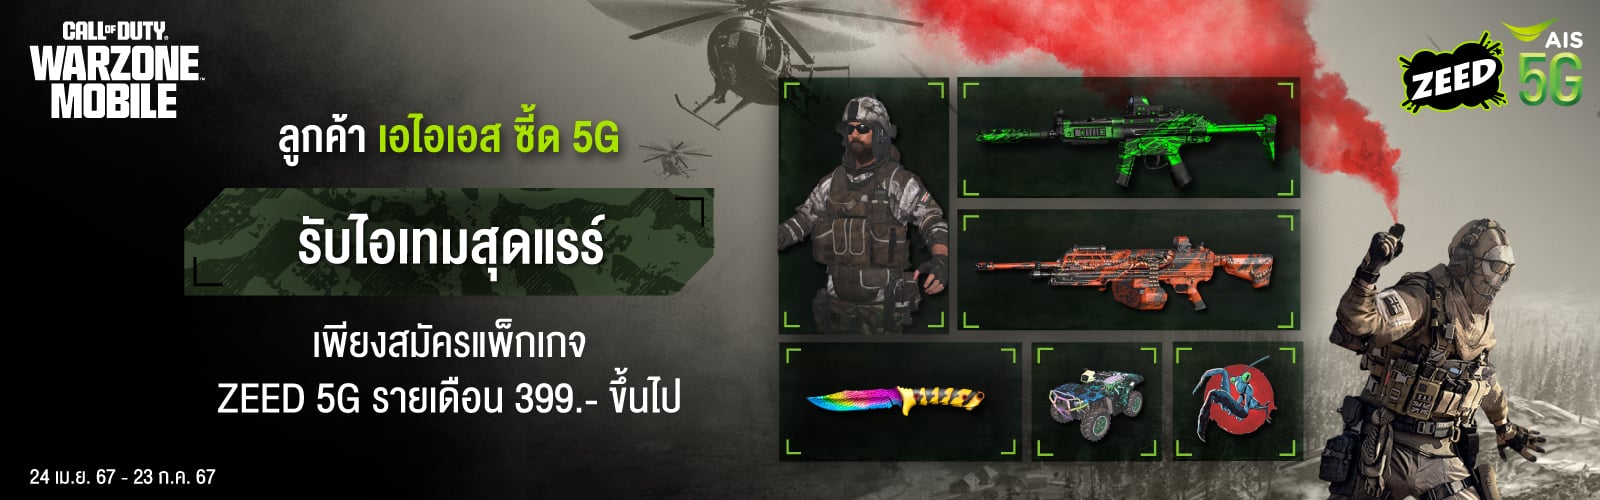 Call of Duty Warzone Mobile and Zeed 5G, ลูกค้าเอไอเอสซี้ด 5G รับไอเทมสุดแรร์ เพียงสมัครแพ็กเกจ Zeed 5G รายเดือน 399 บาท ขึ้นไป, ระยะเวลาแคมเปญ 24 เมษายน 67 - 23 กรกฎาคม 67